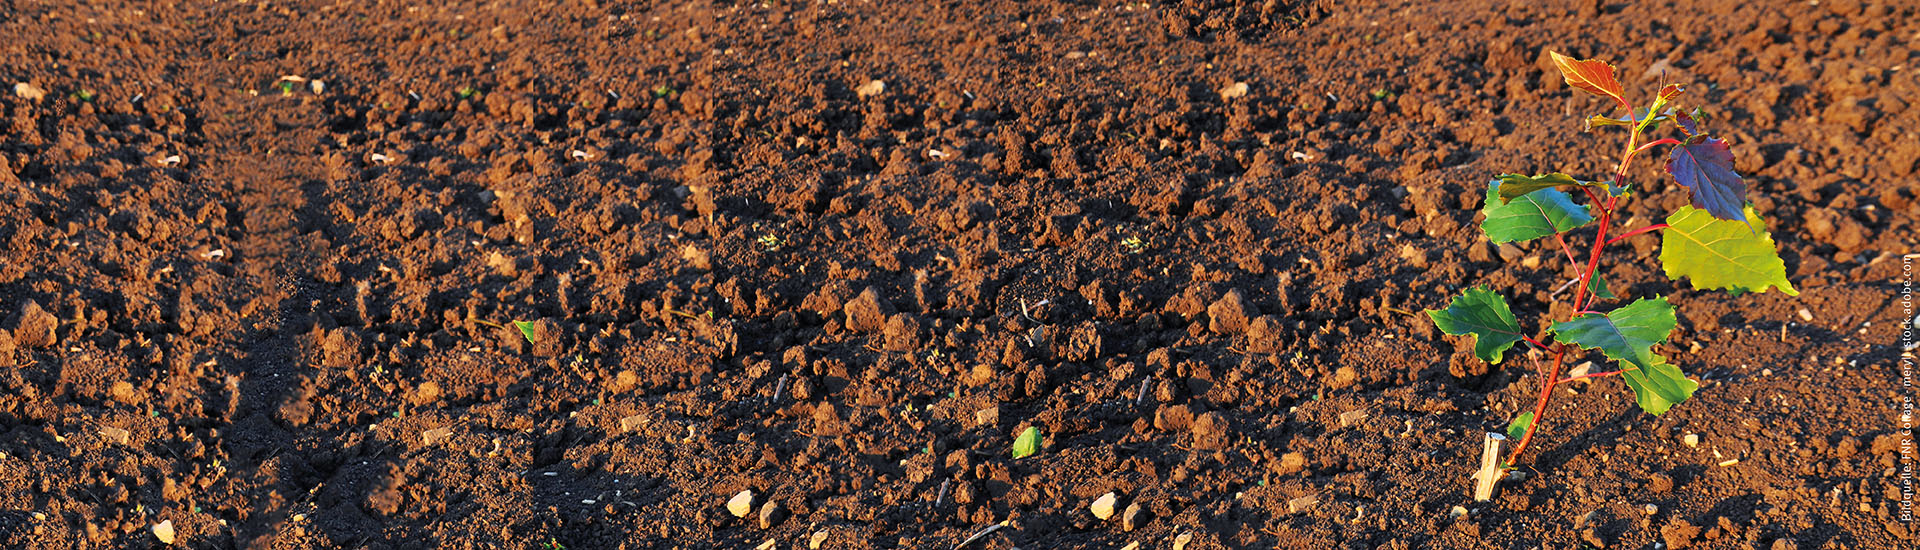 Agroforstsysteme - Pappel - Quelle: FNR Collage / merryll - stock.adobe.com